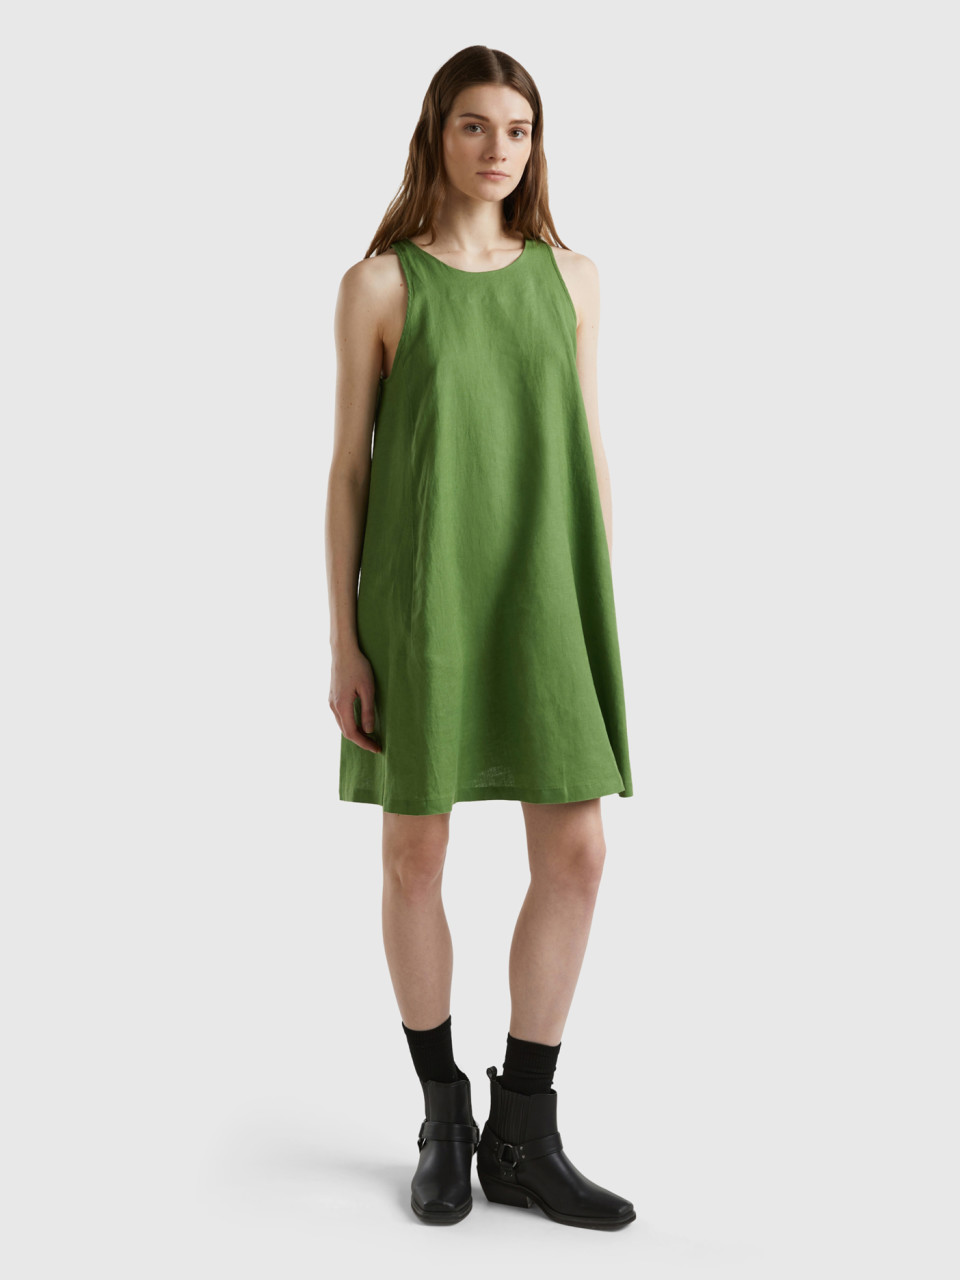 Benetton, Sleeveless Dress In Pure Linen, Military Green, Women